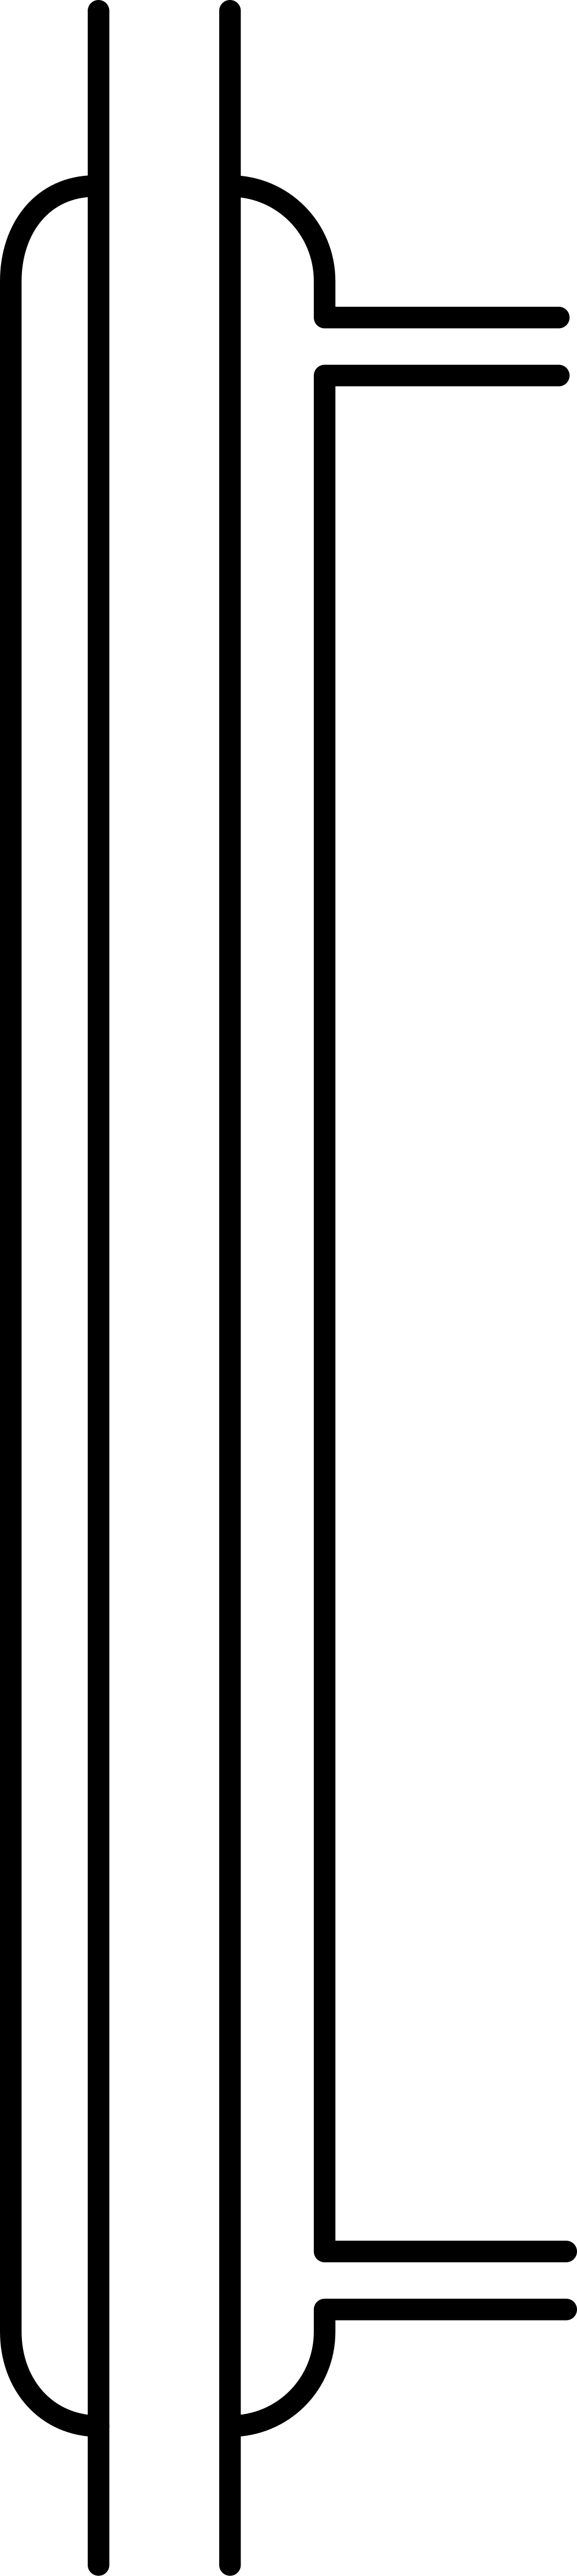 Image result for liebig condenser diagram